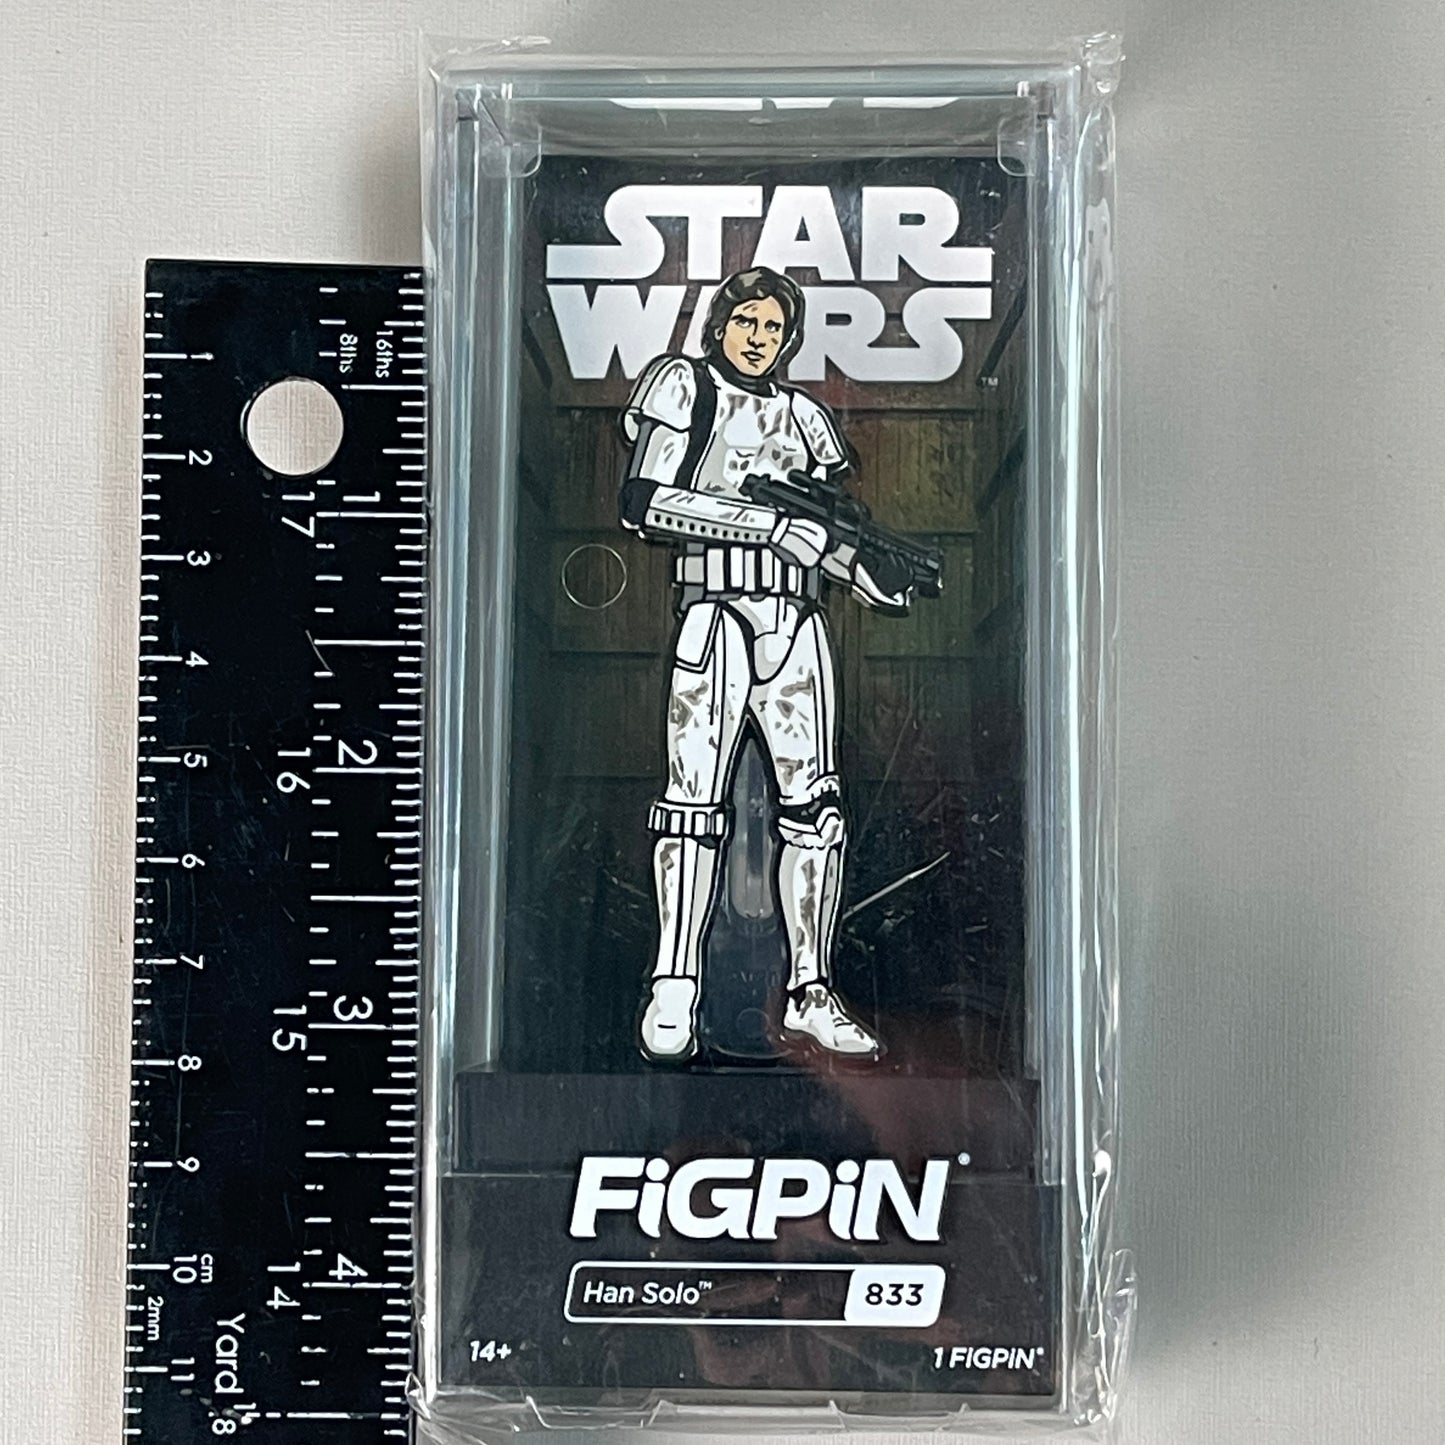 FIGPIN / DISNEY Han Solo Star Wars A New Hope Comic Con Logo Pin 833 (Locked New)